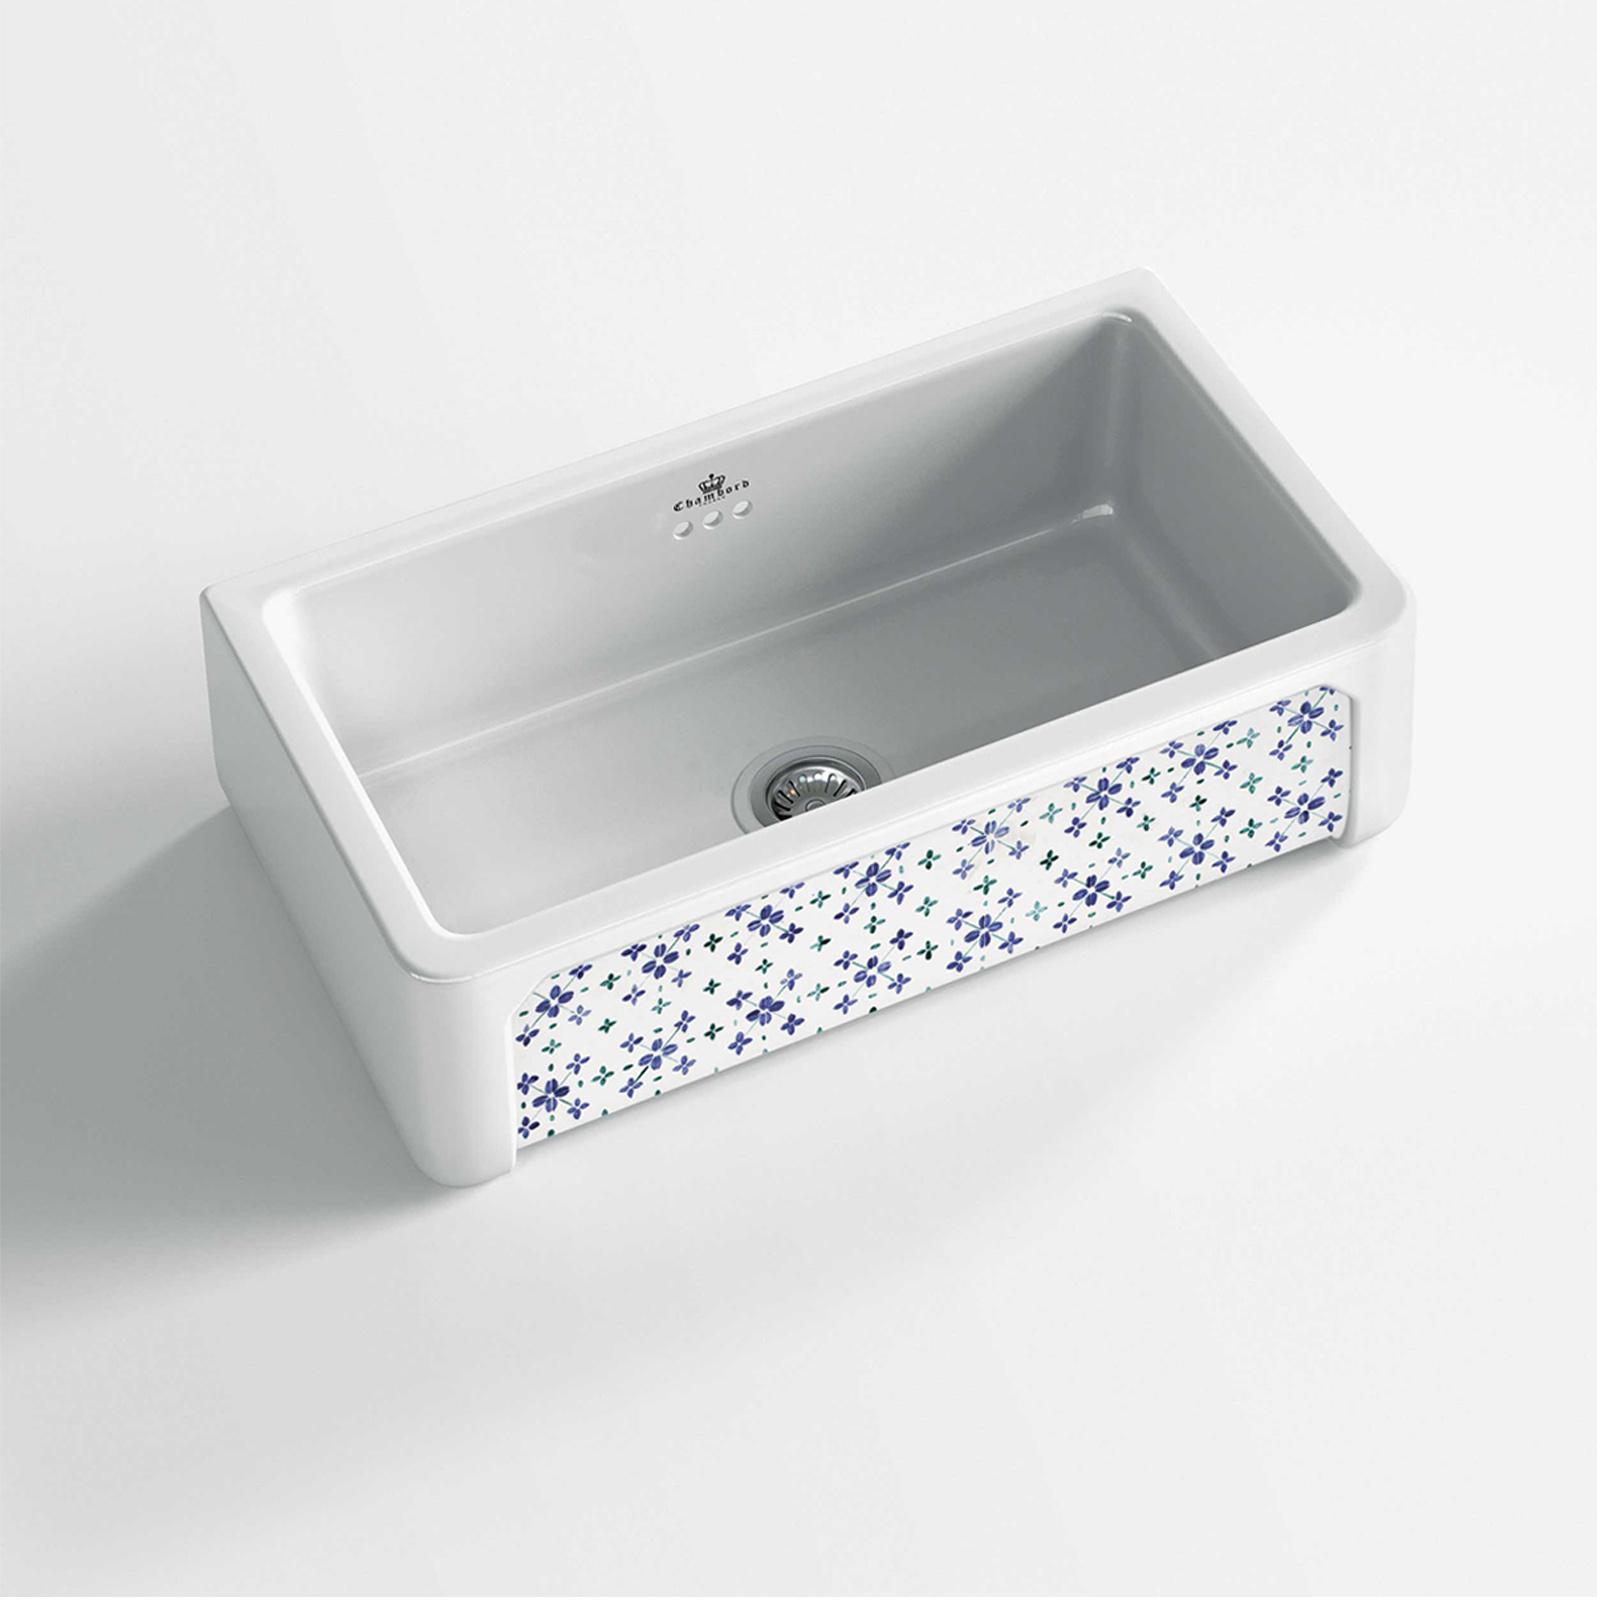 High-quality sink Henri II Bretagne - single bowl, decorated ceramic